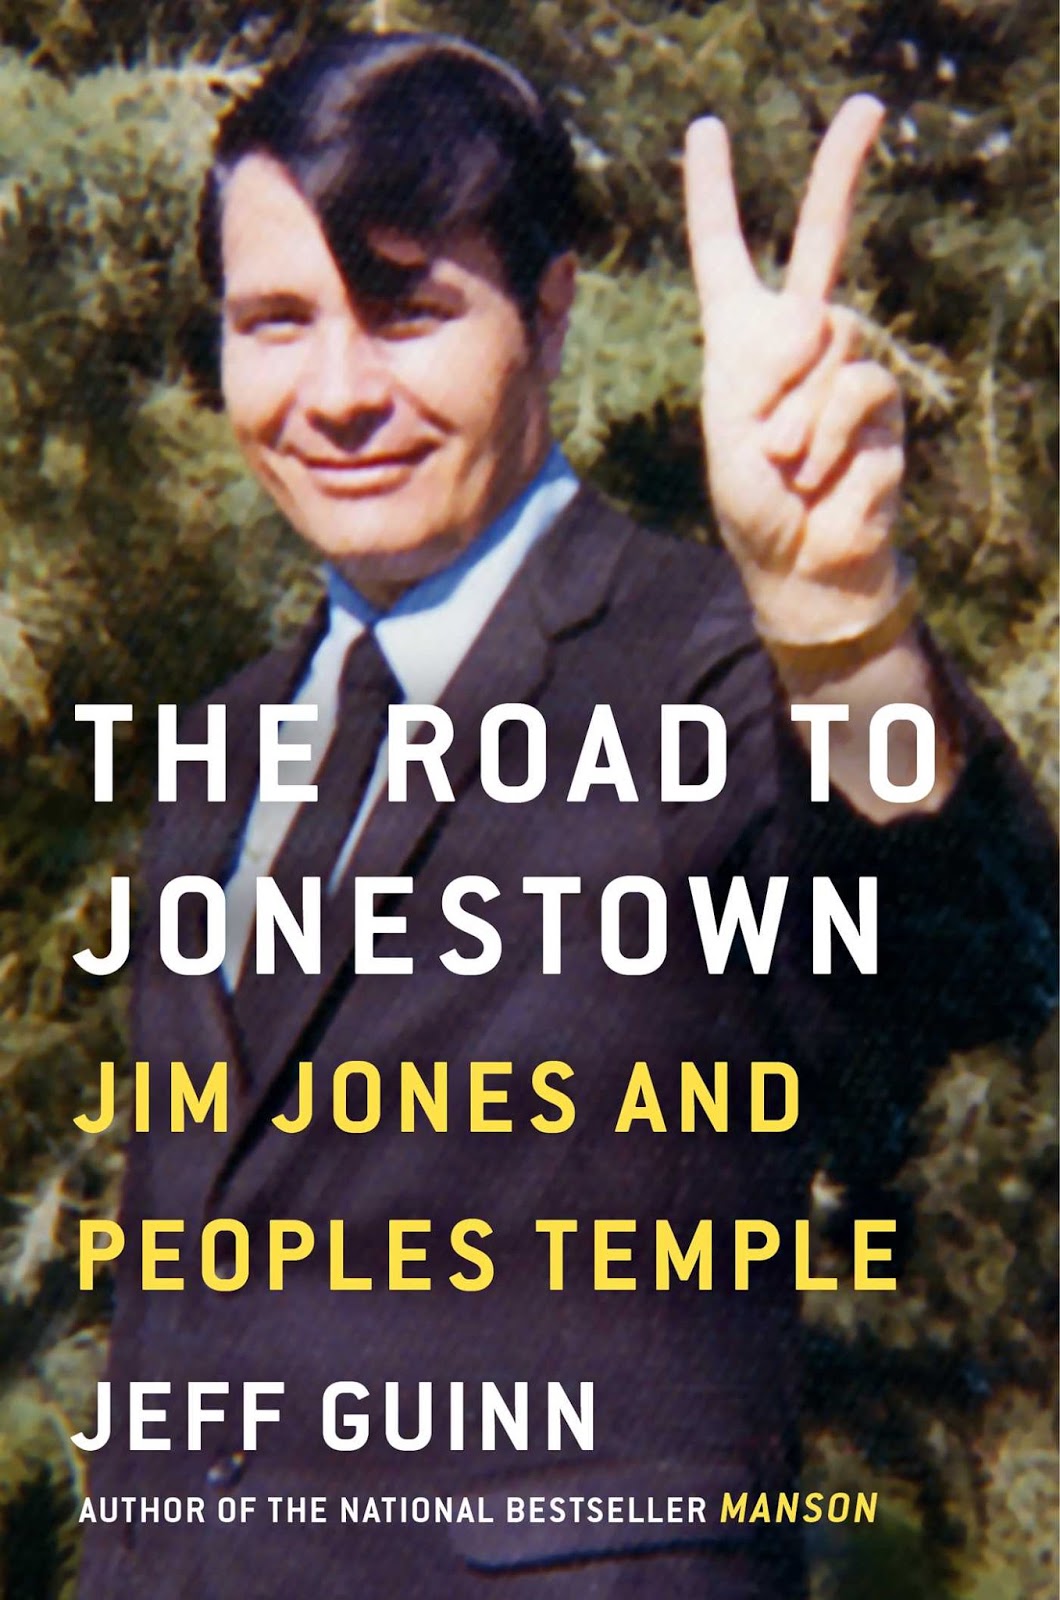 The road to jonestown jim jones and peoples temple pdf